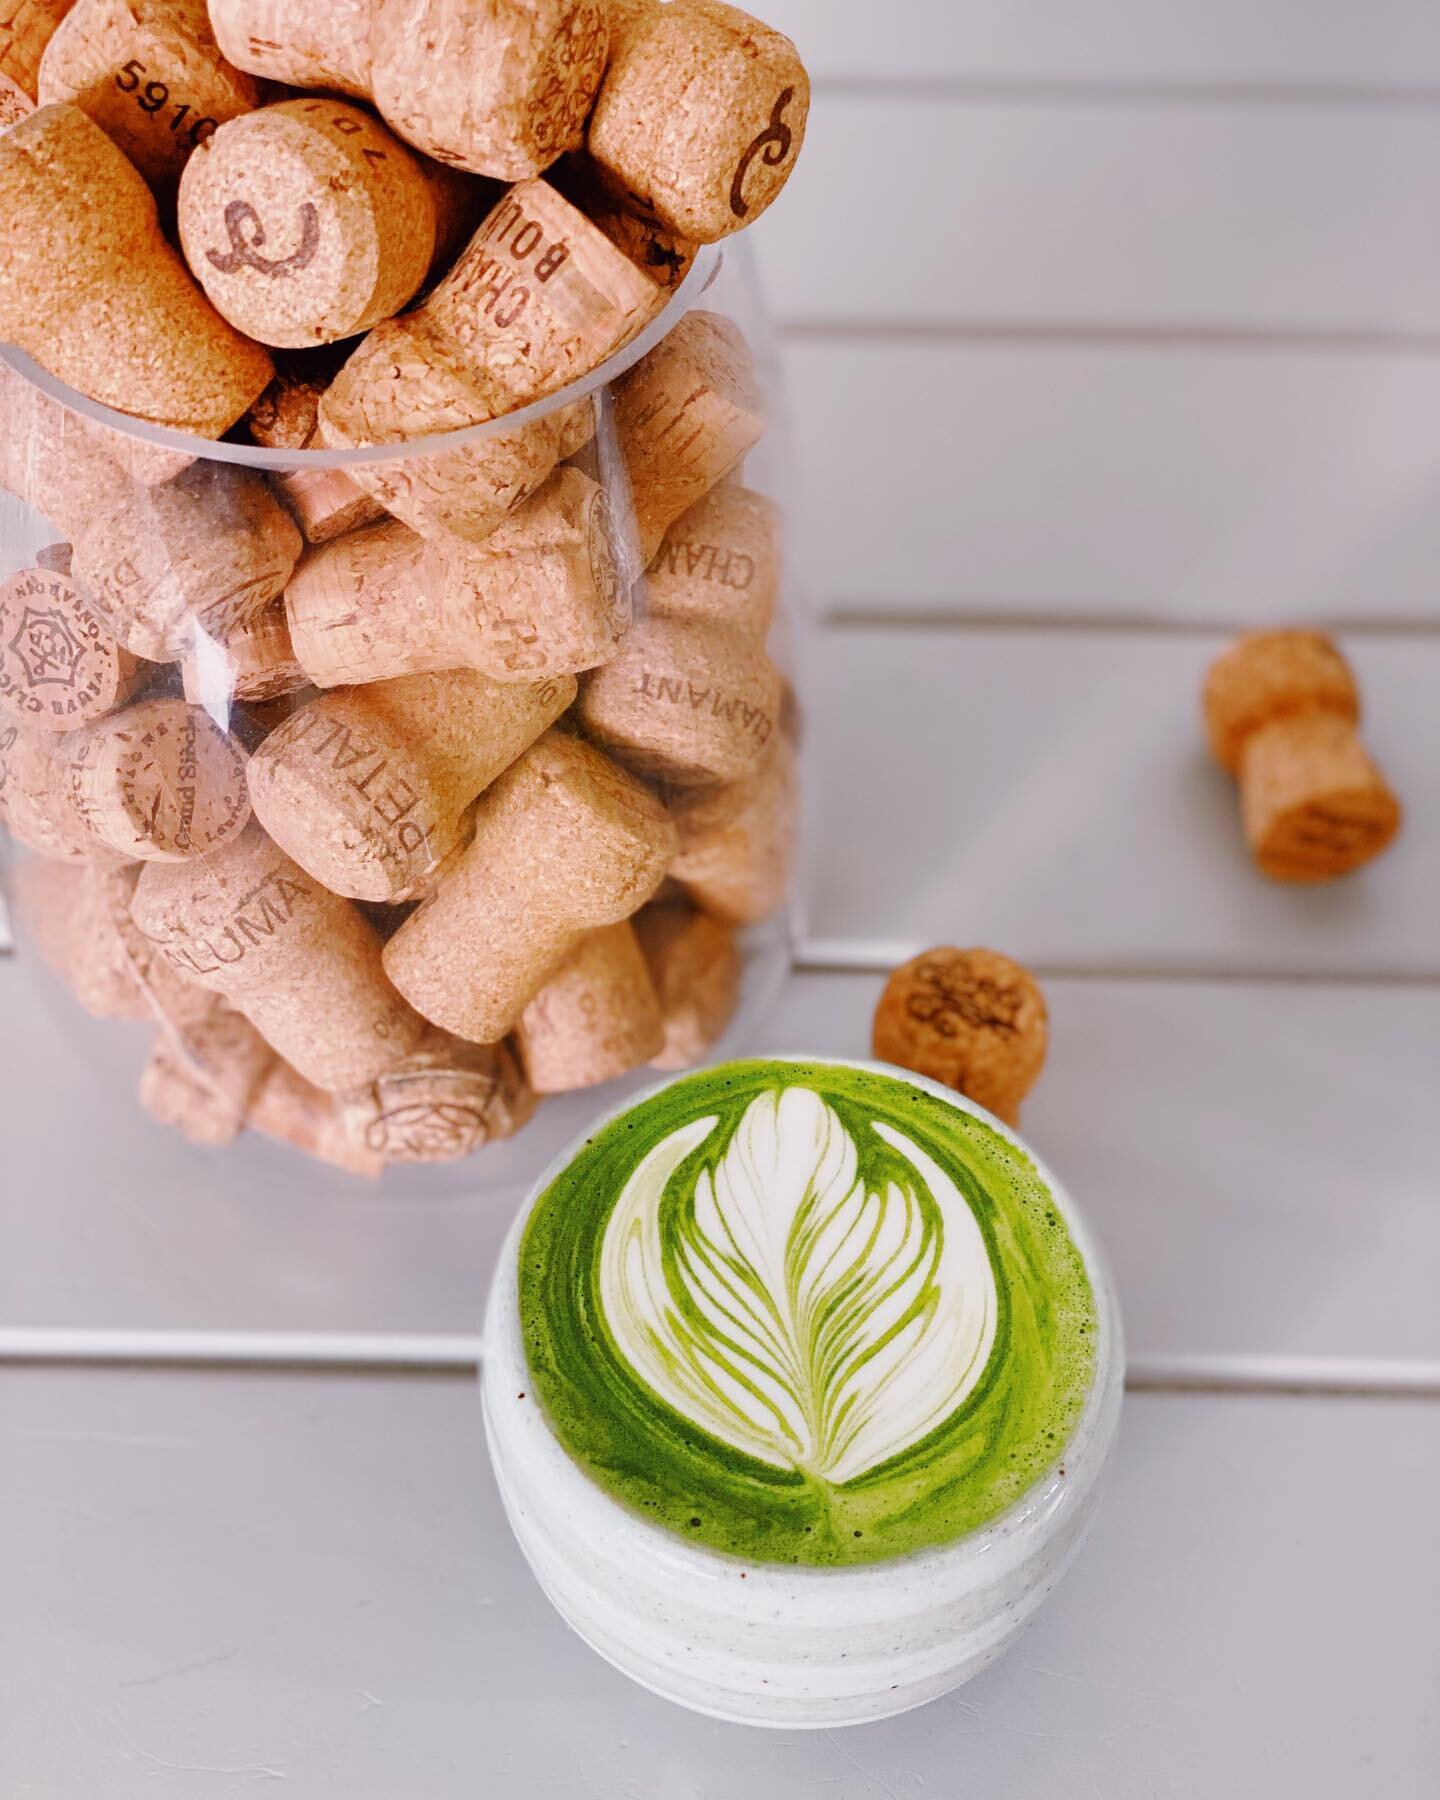 Matcha latte by @j_cannons 💚 #drinkmatchaplanttrees #matchalatte #shoshinmatcha